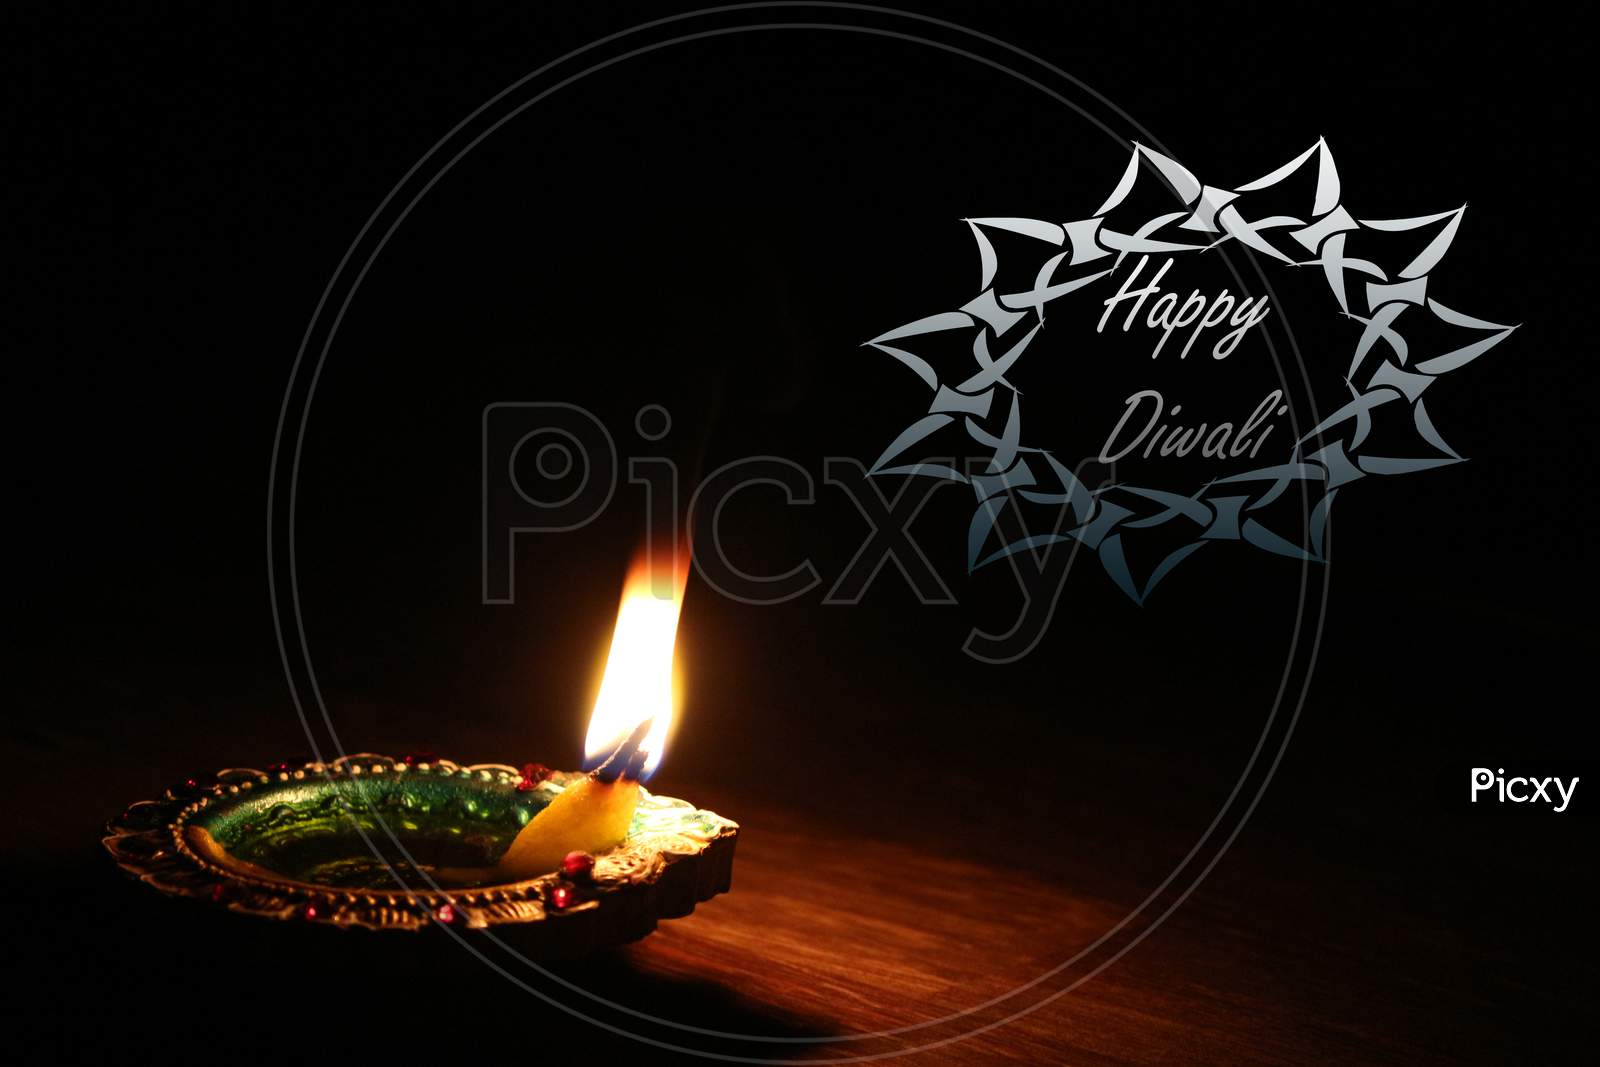 Glowing diya candles on a black background Happy diwali wish mesaage greetings